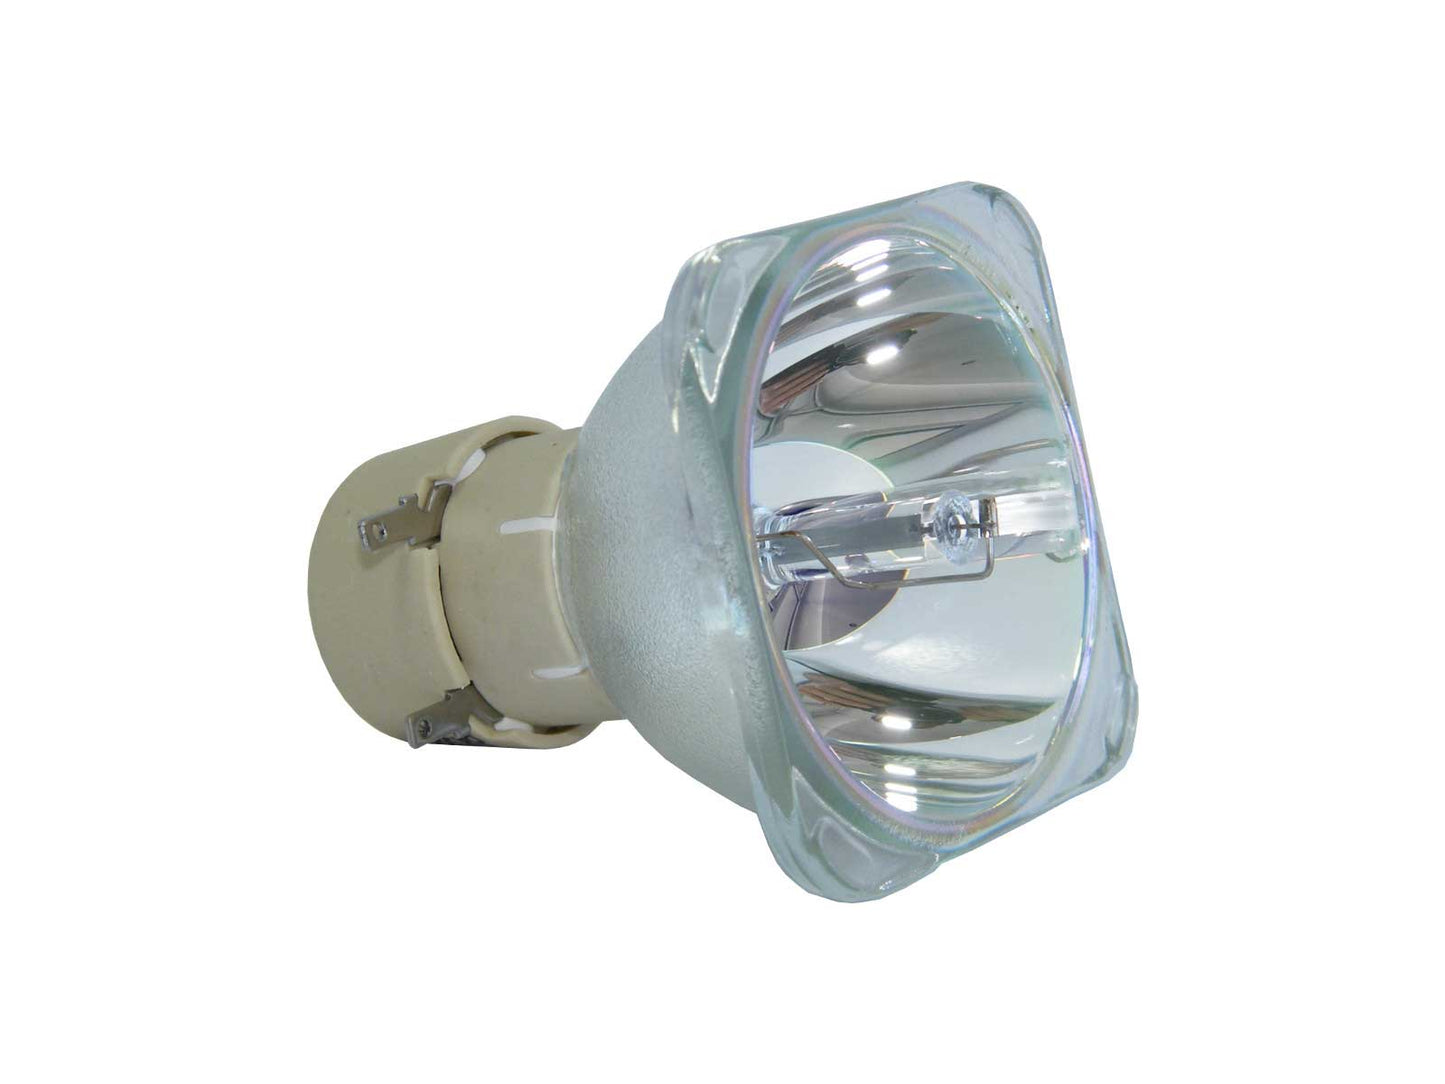 azurano Beamerlampe für ACER MC.JMY11.001 Ersatzlampe Projektorlampe - Bild 1